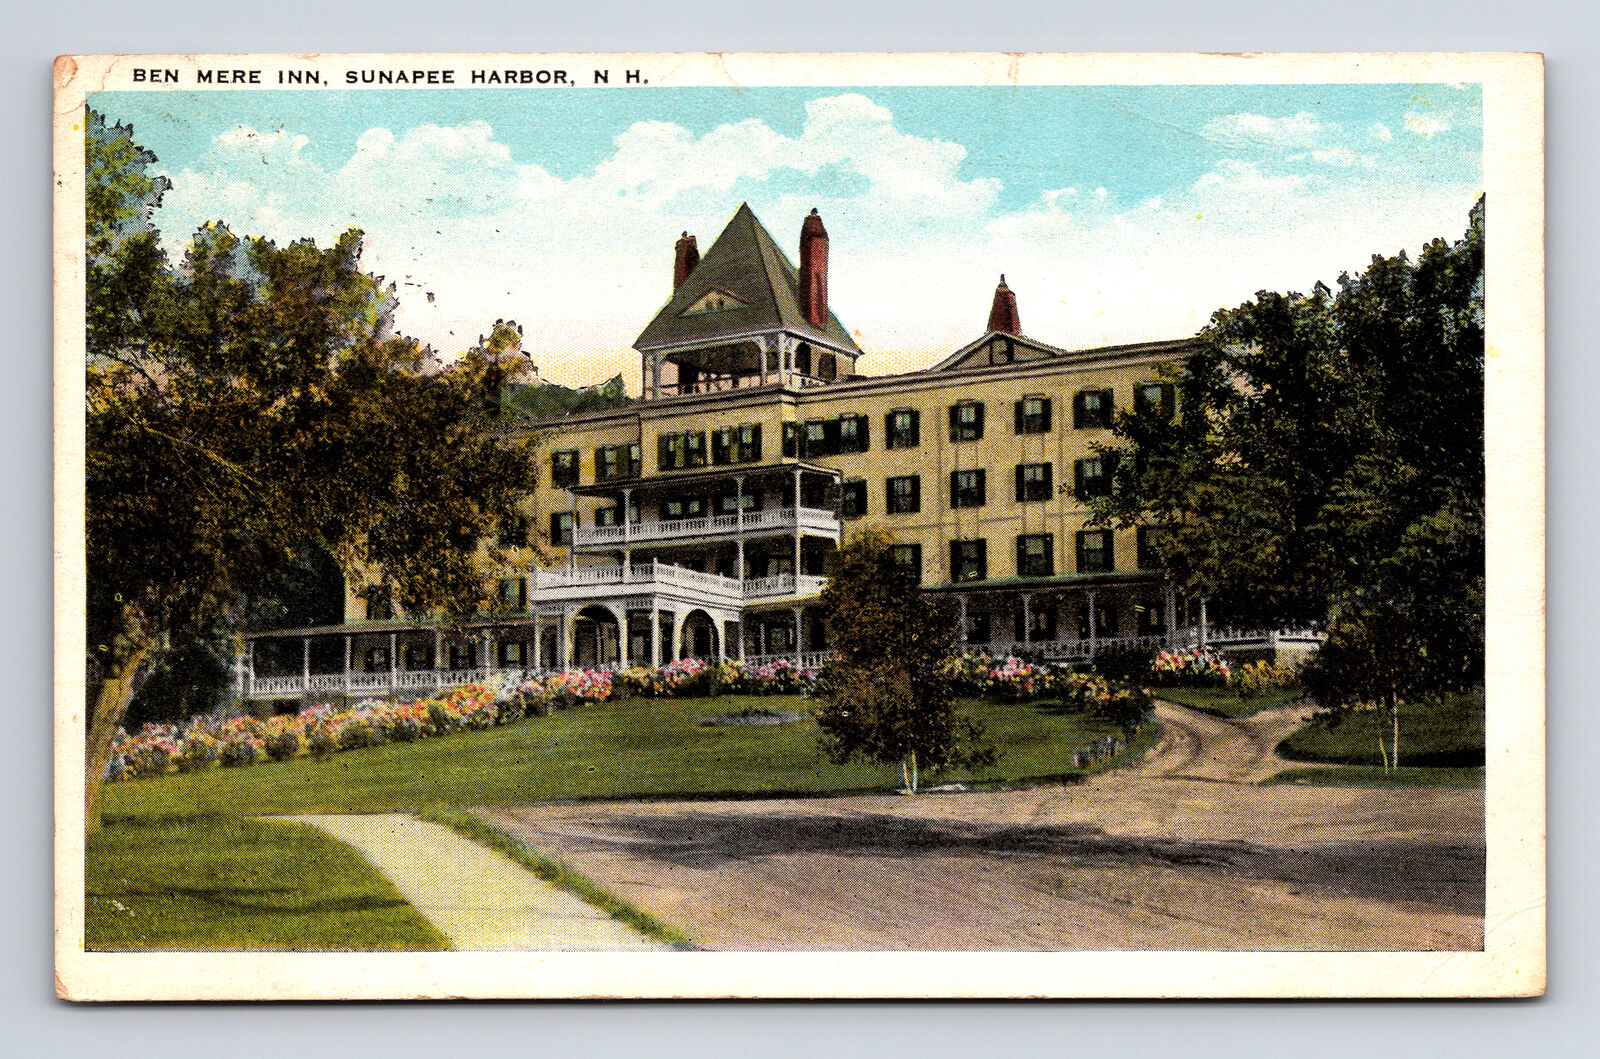 1926 Bene Mere Inn Hotel Sunapee Harbor NH Postcard